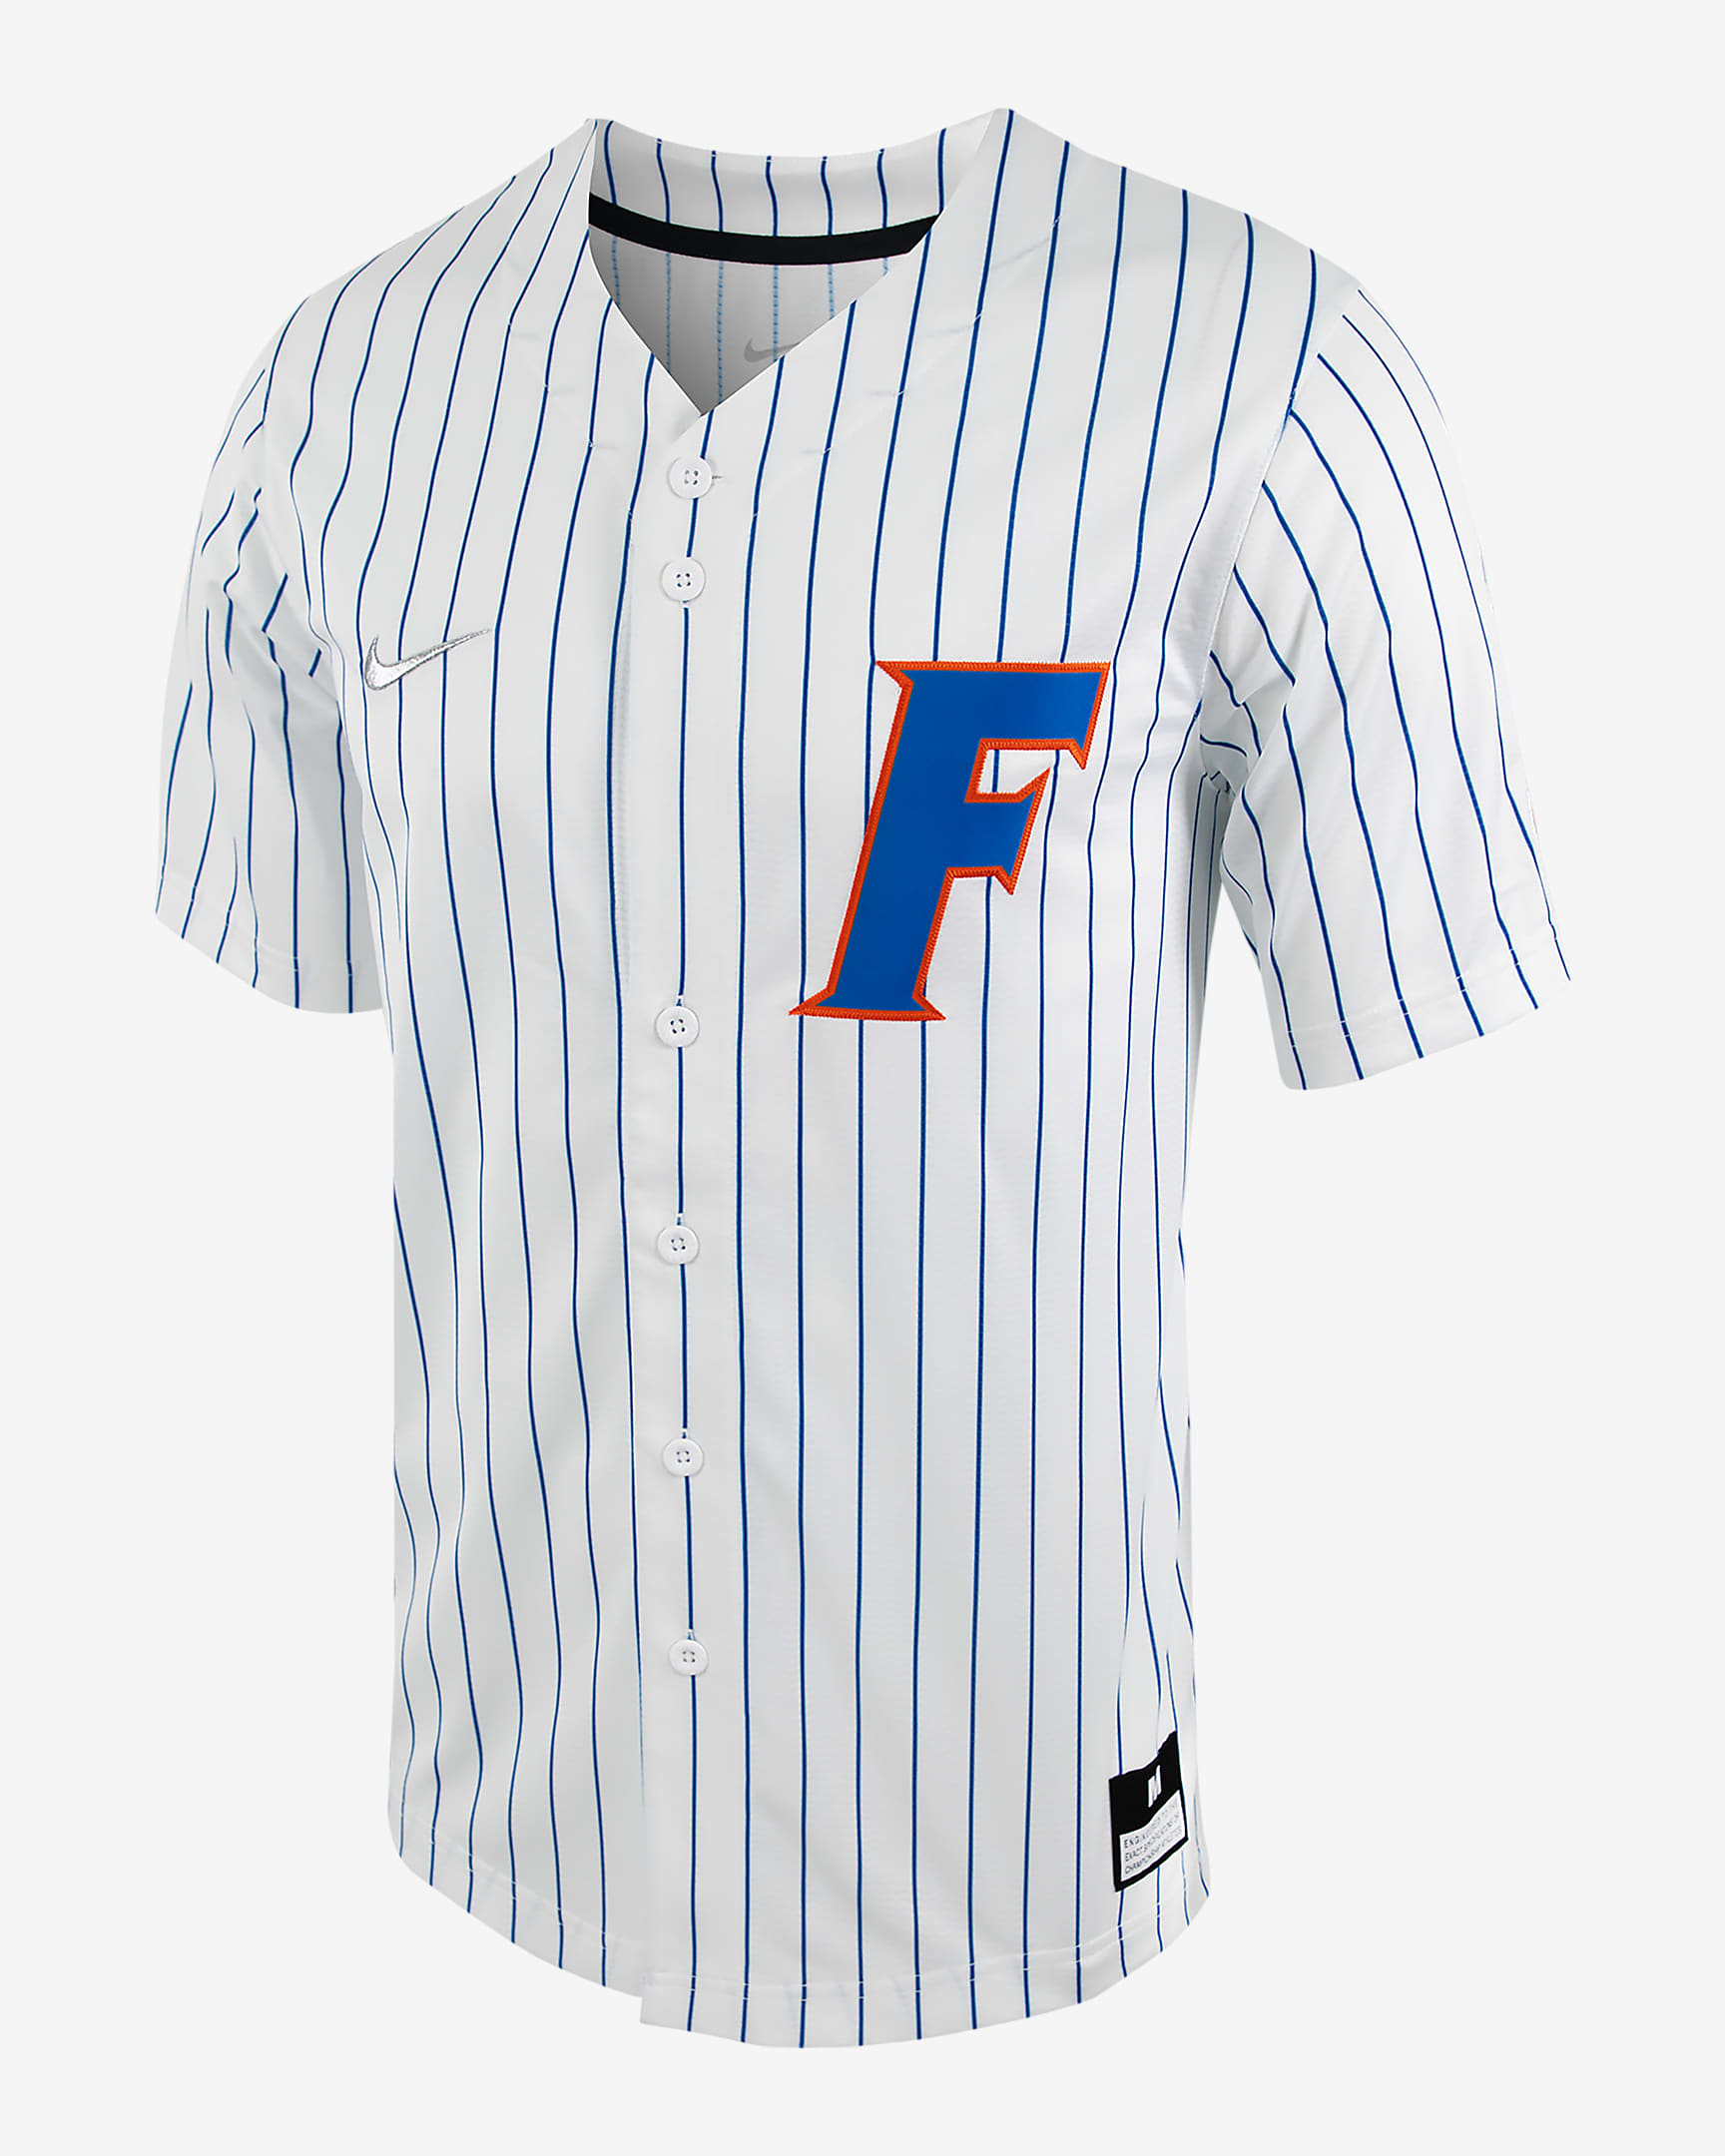 florida-men-s-nike-college-full-button-baseball-jersey-nike